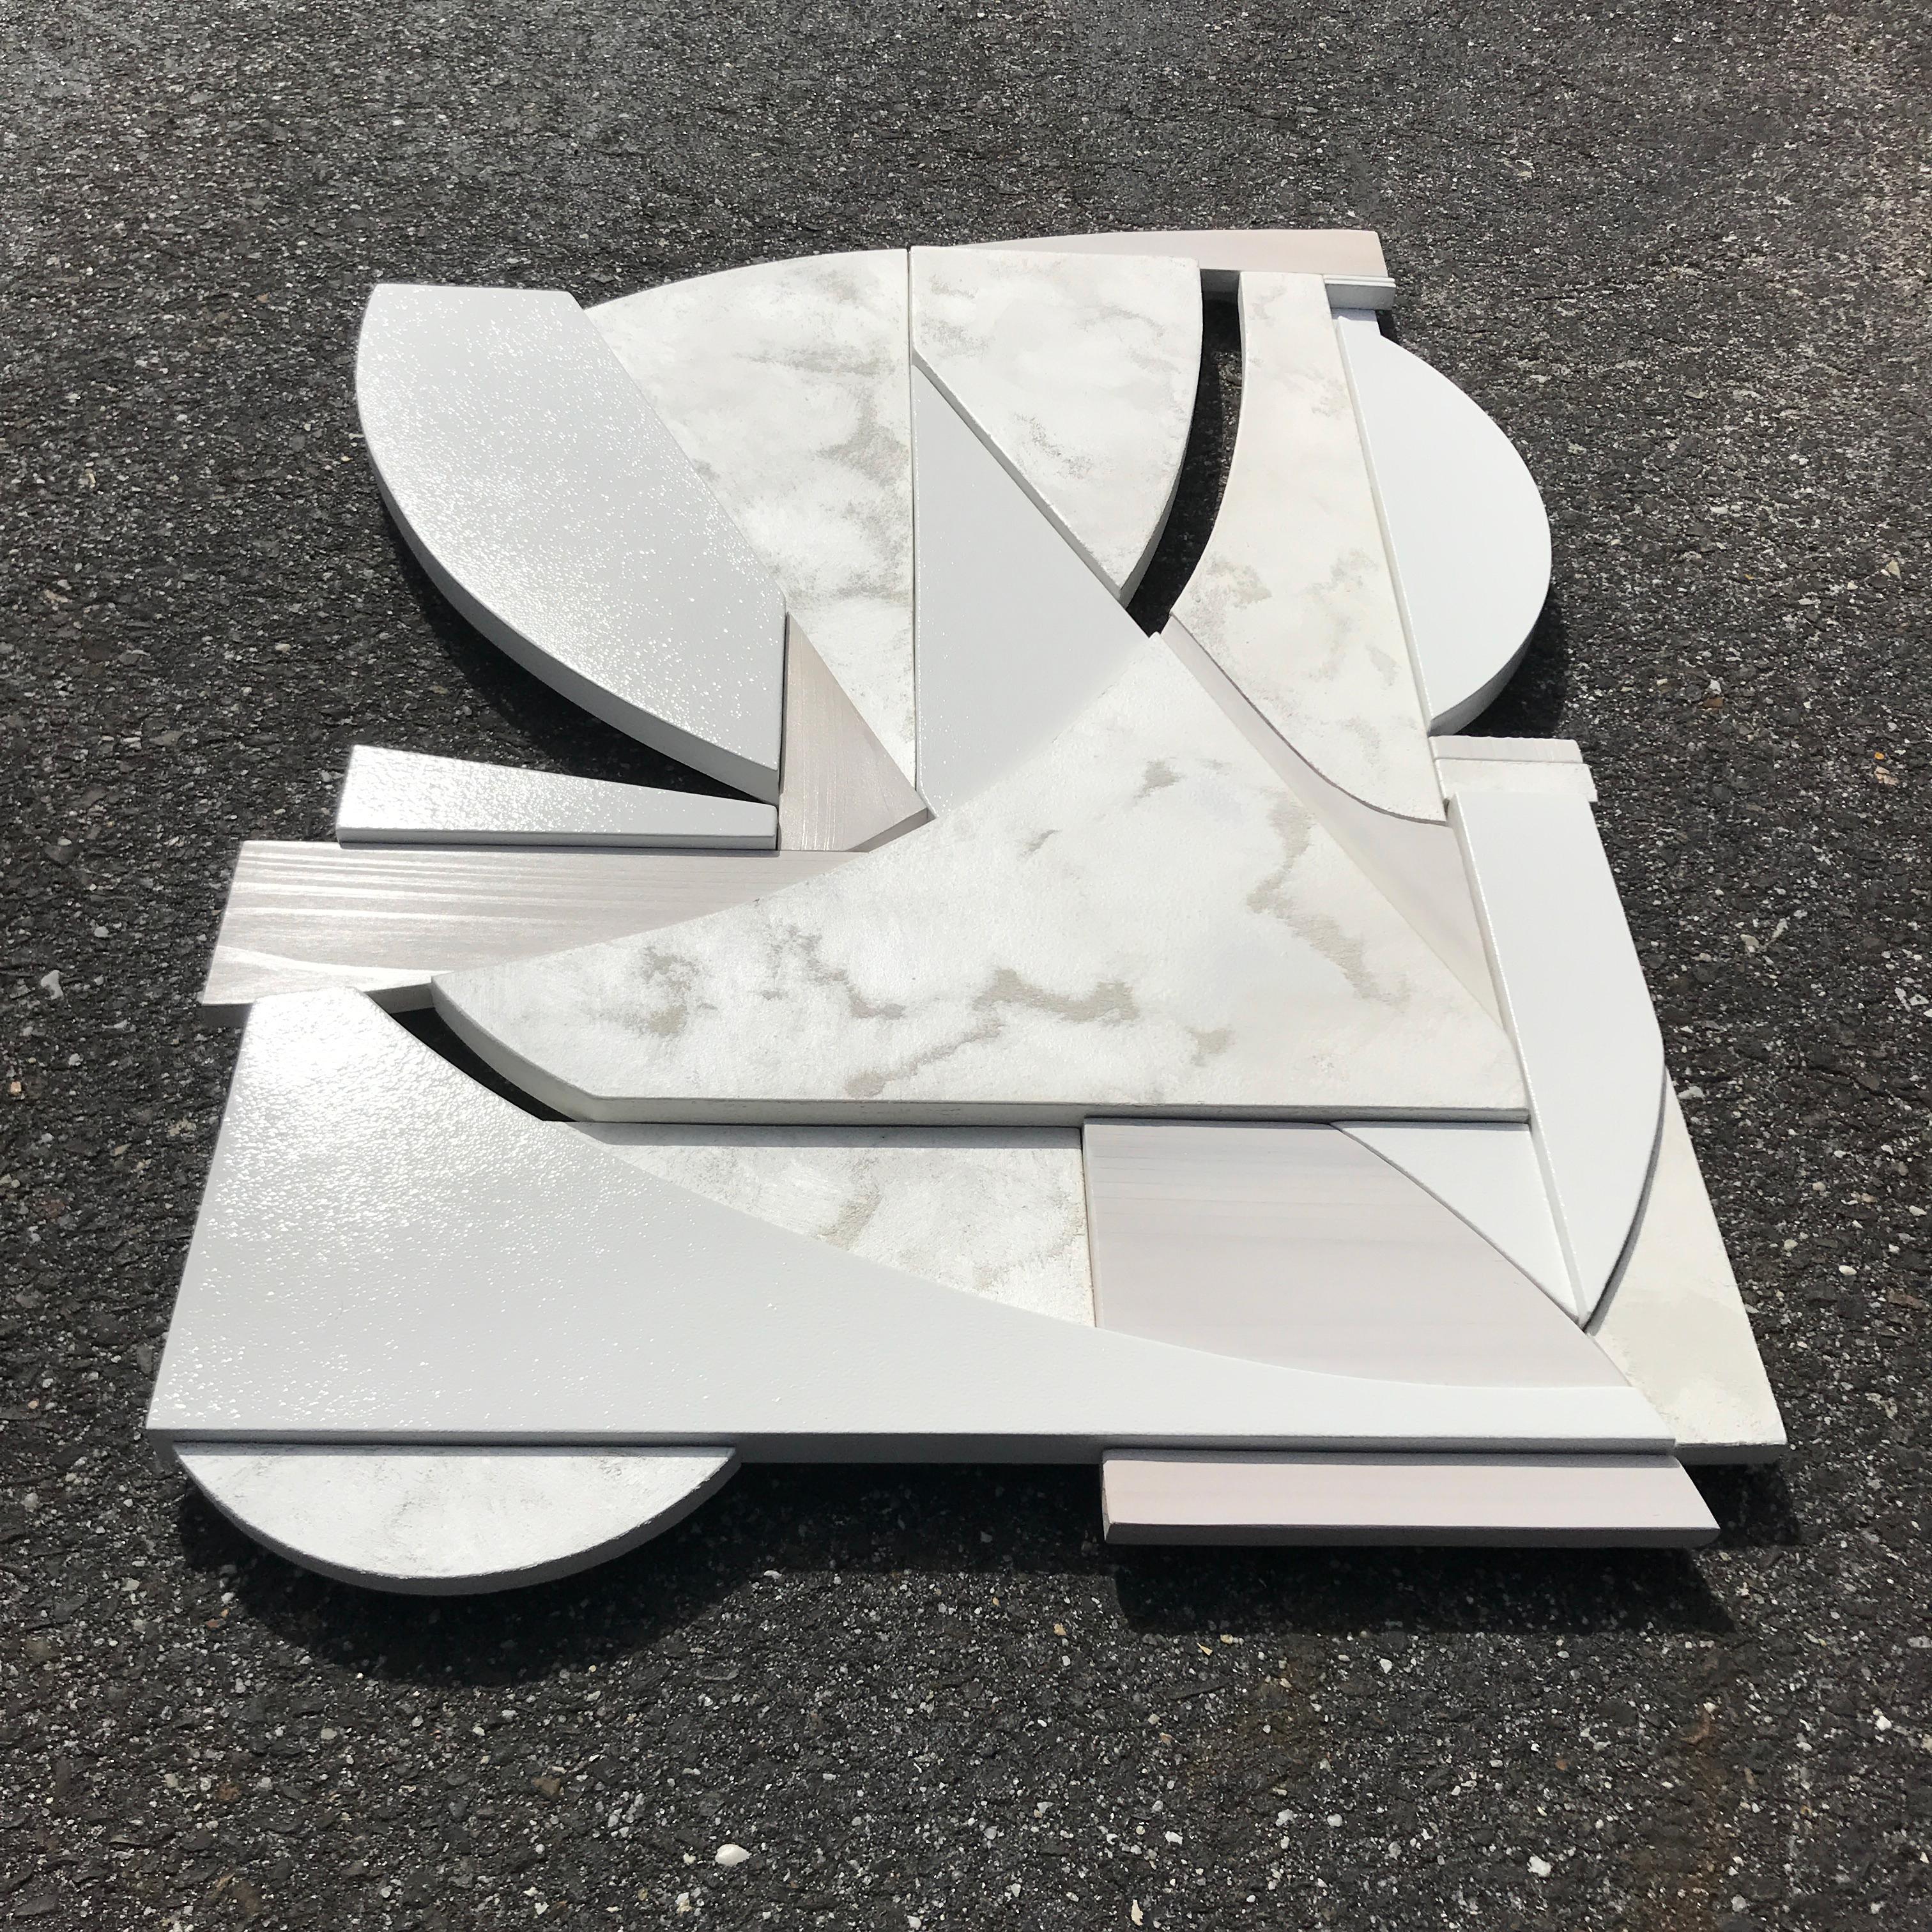 Blanco (modern art deco abstract wall sculpture geometric white monochrome cubic 1